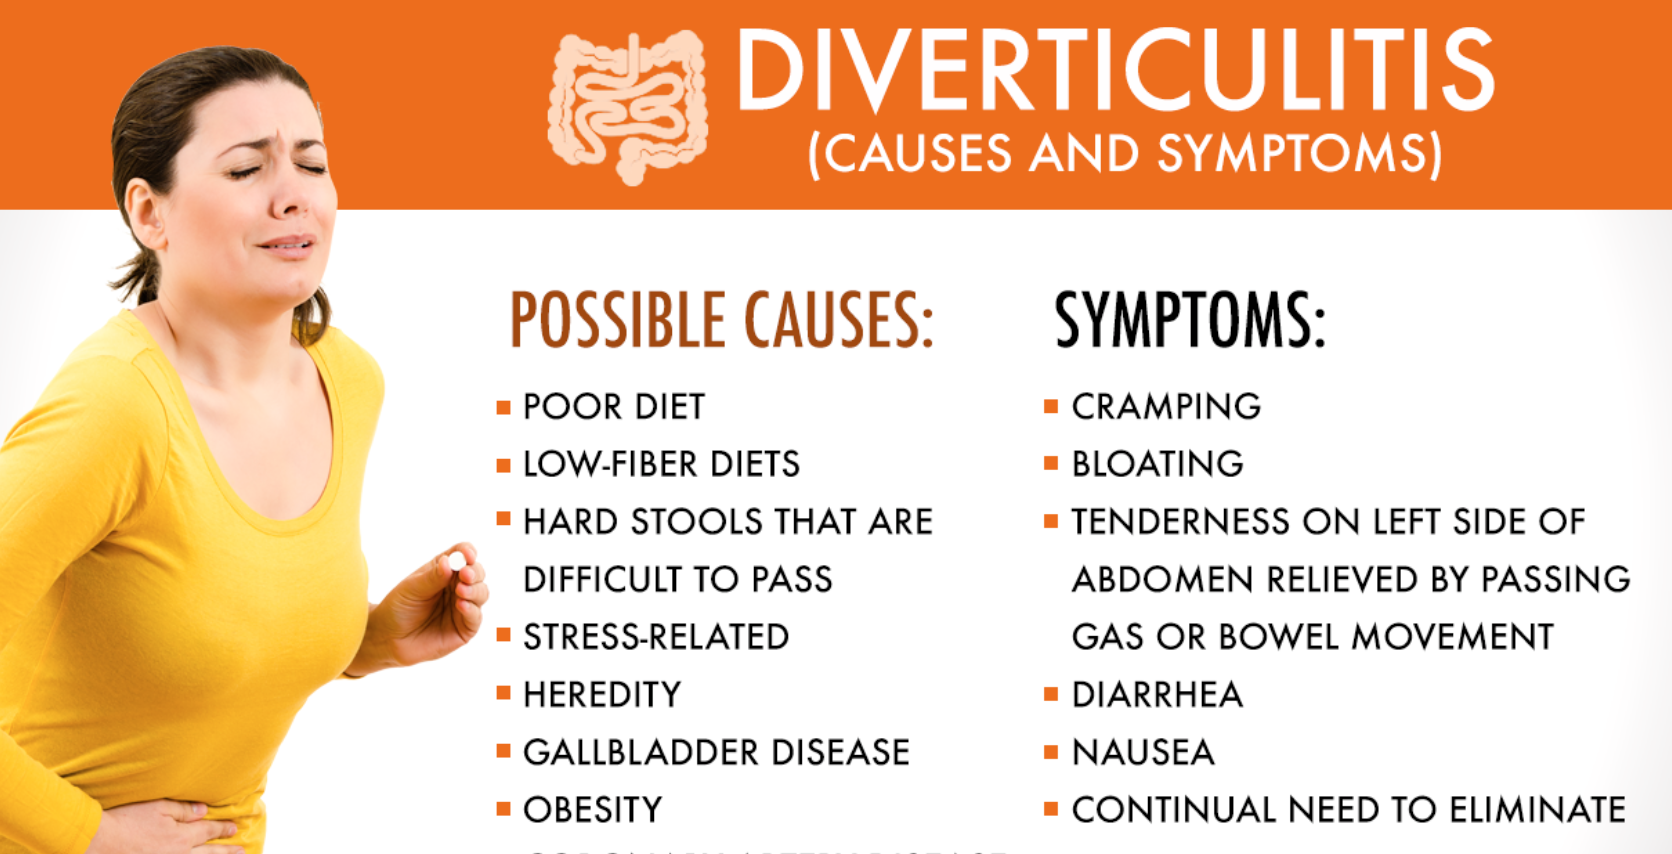 diverticulosis diet